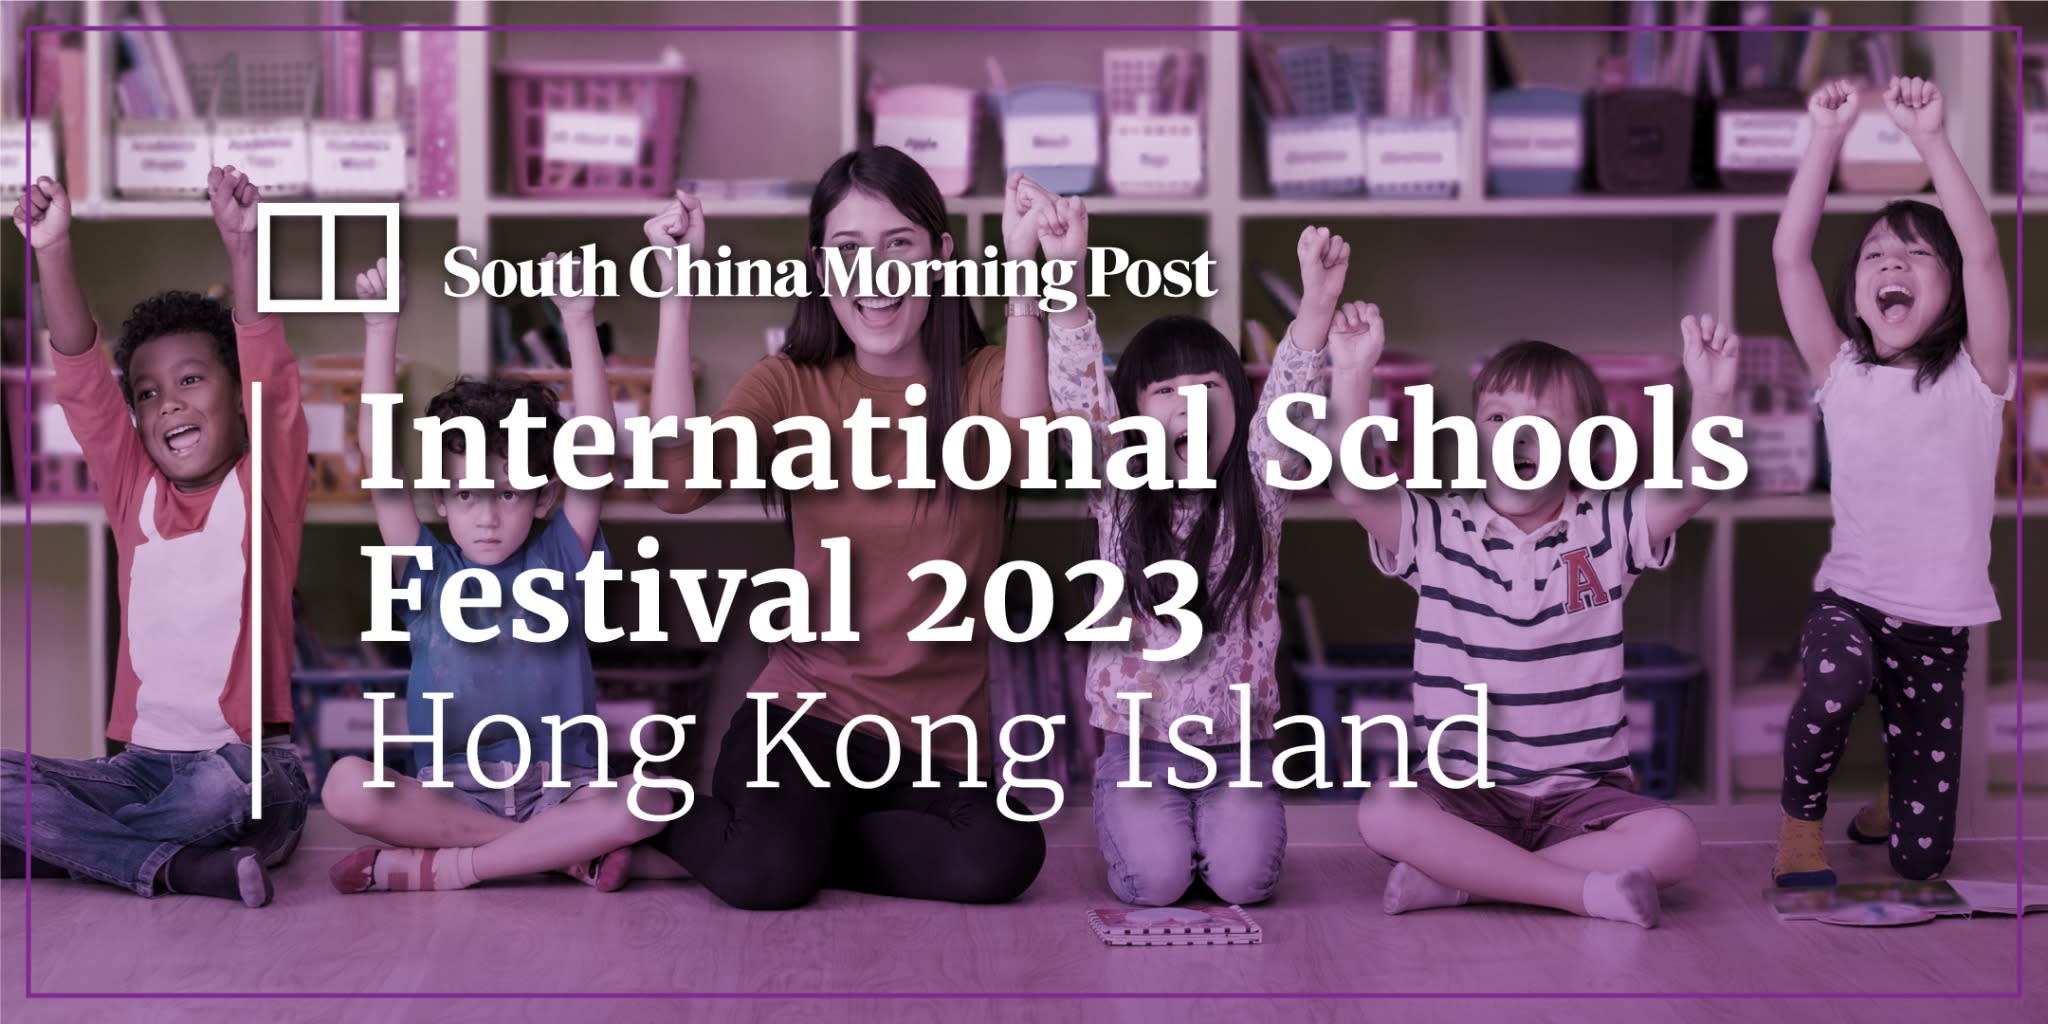 International Schools Festival - Hong Kong Island 2023